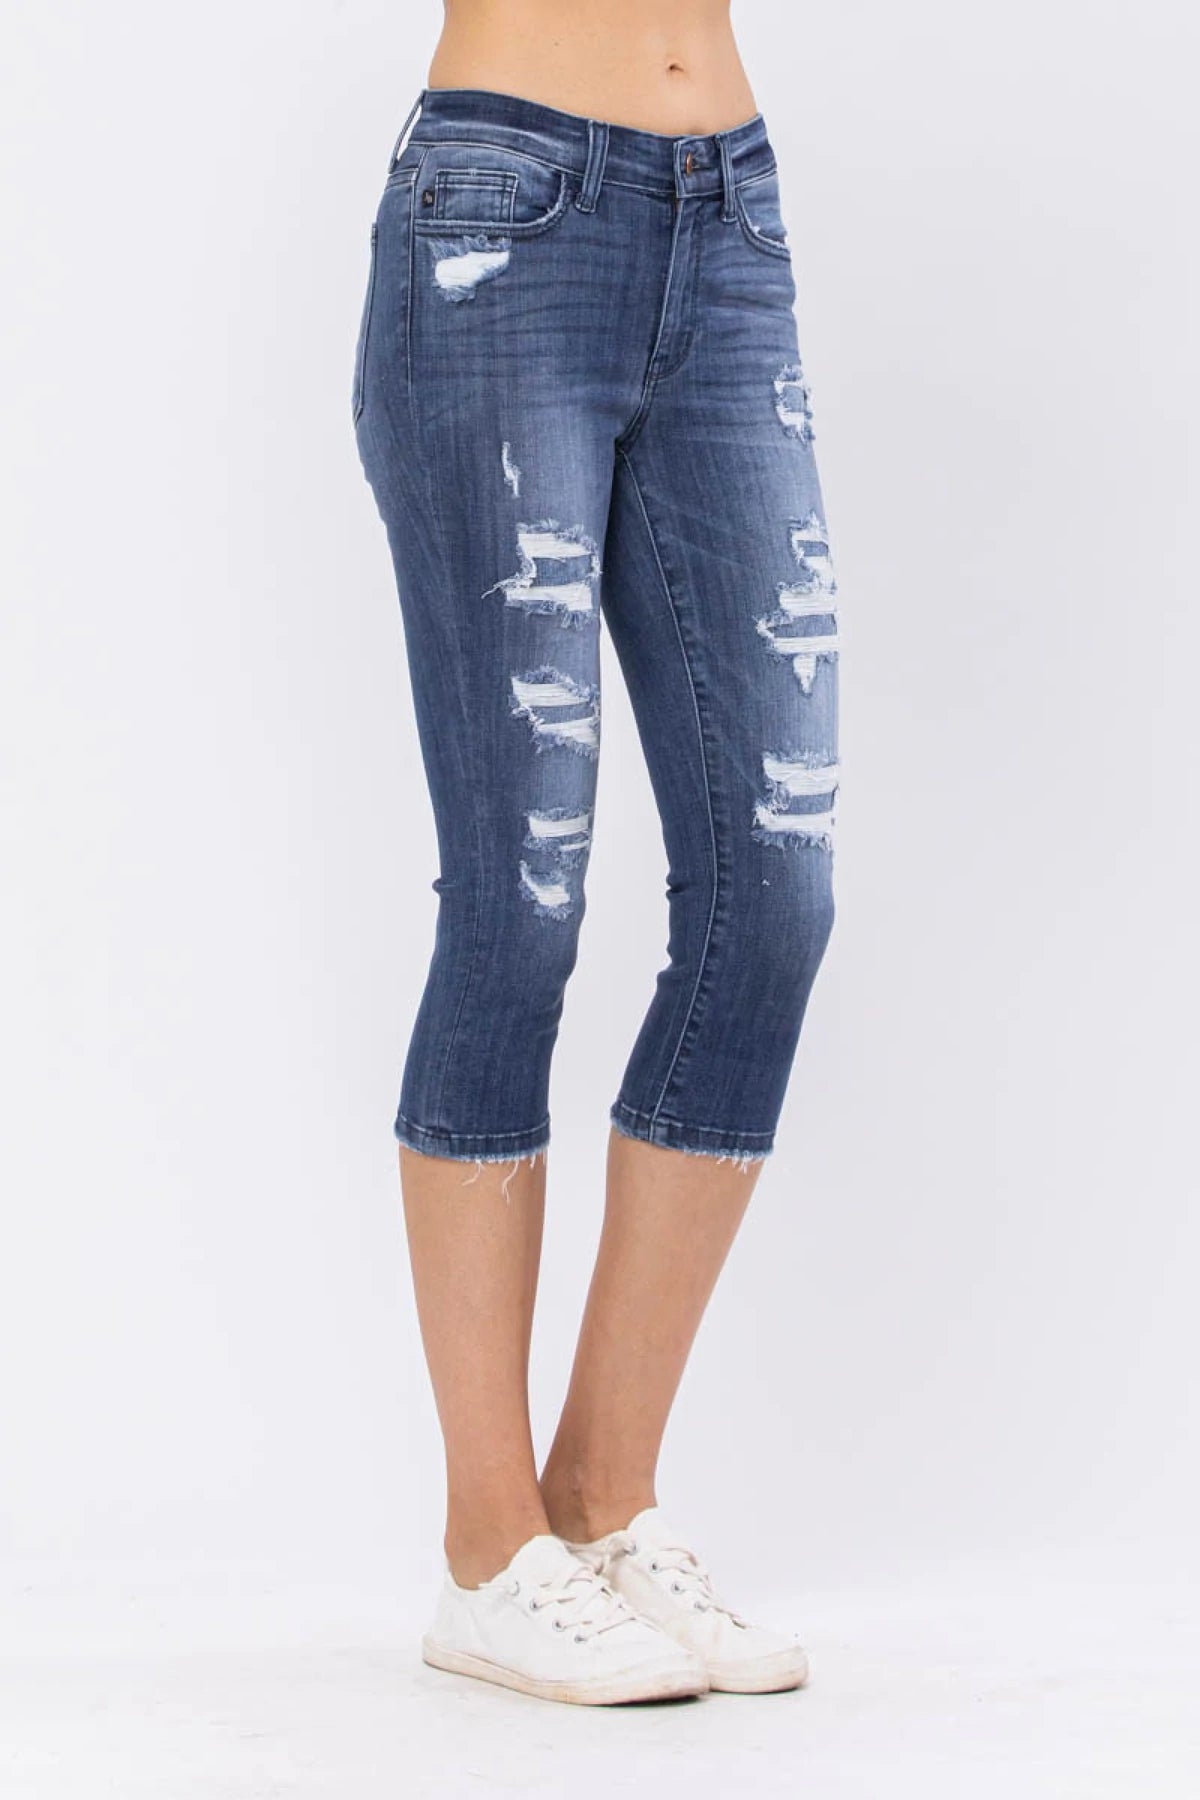 Judy Blue Distressed Patch Capri Jeans